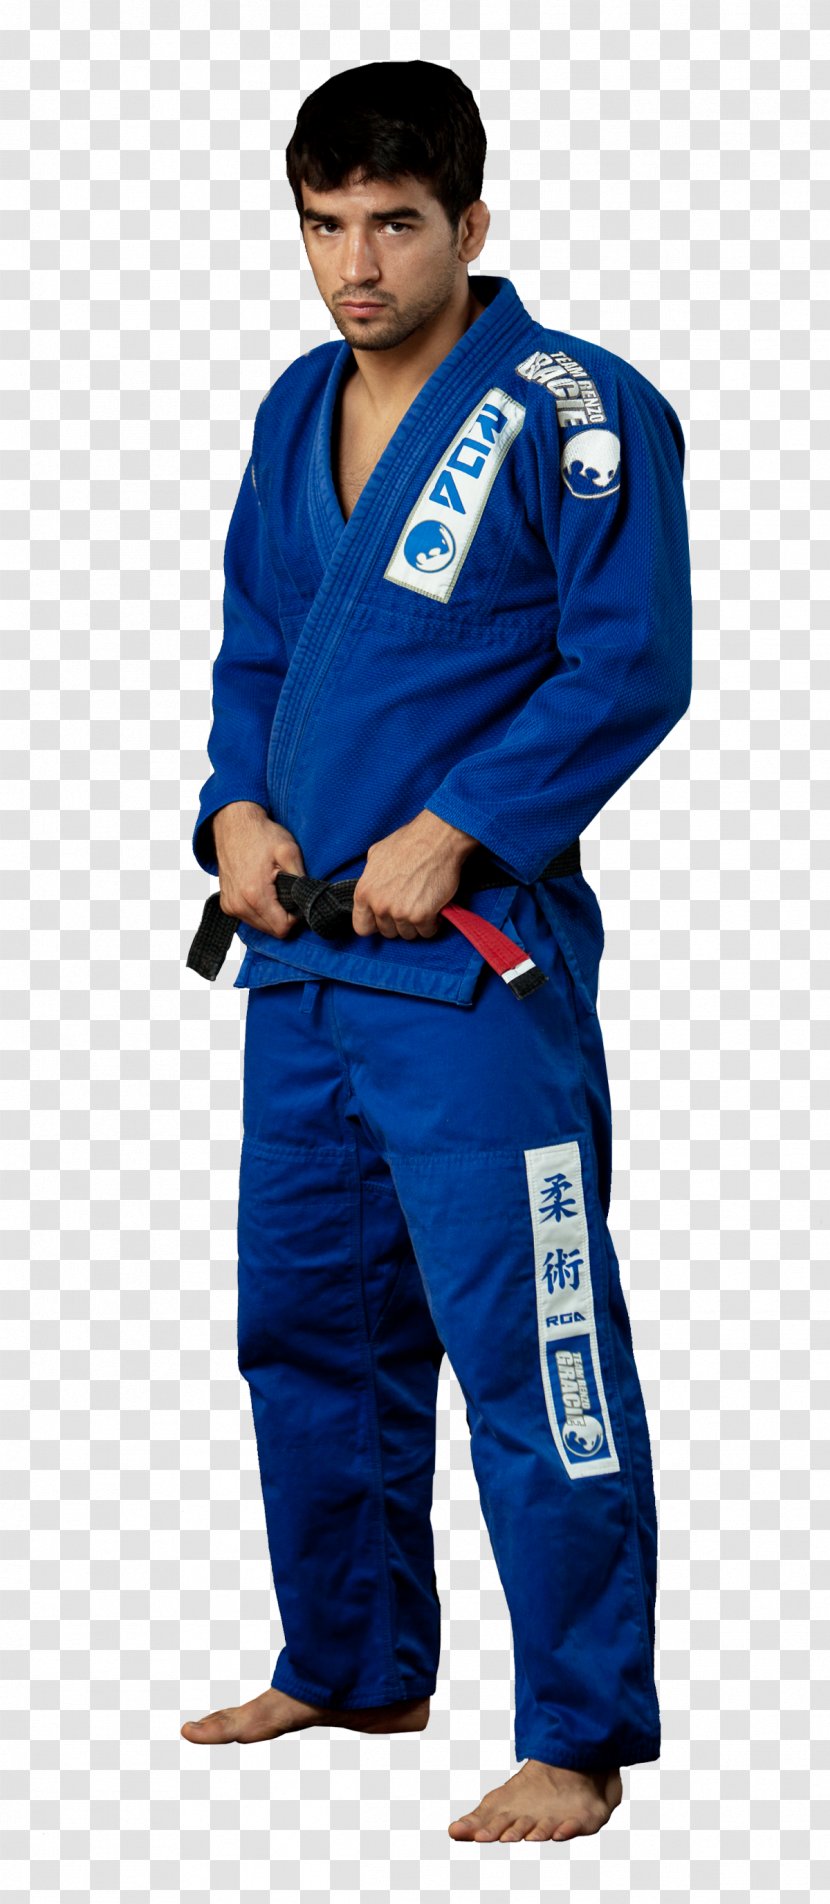 Renzo Gracie Clothing Uniform Costume Pants - Judo Transparent PNG